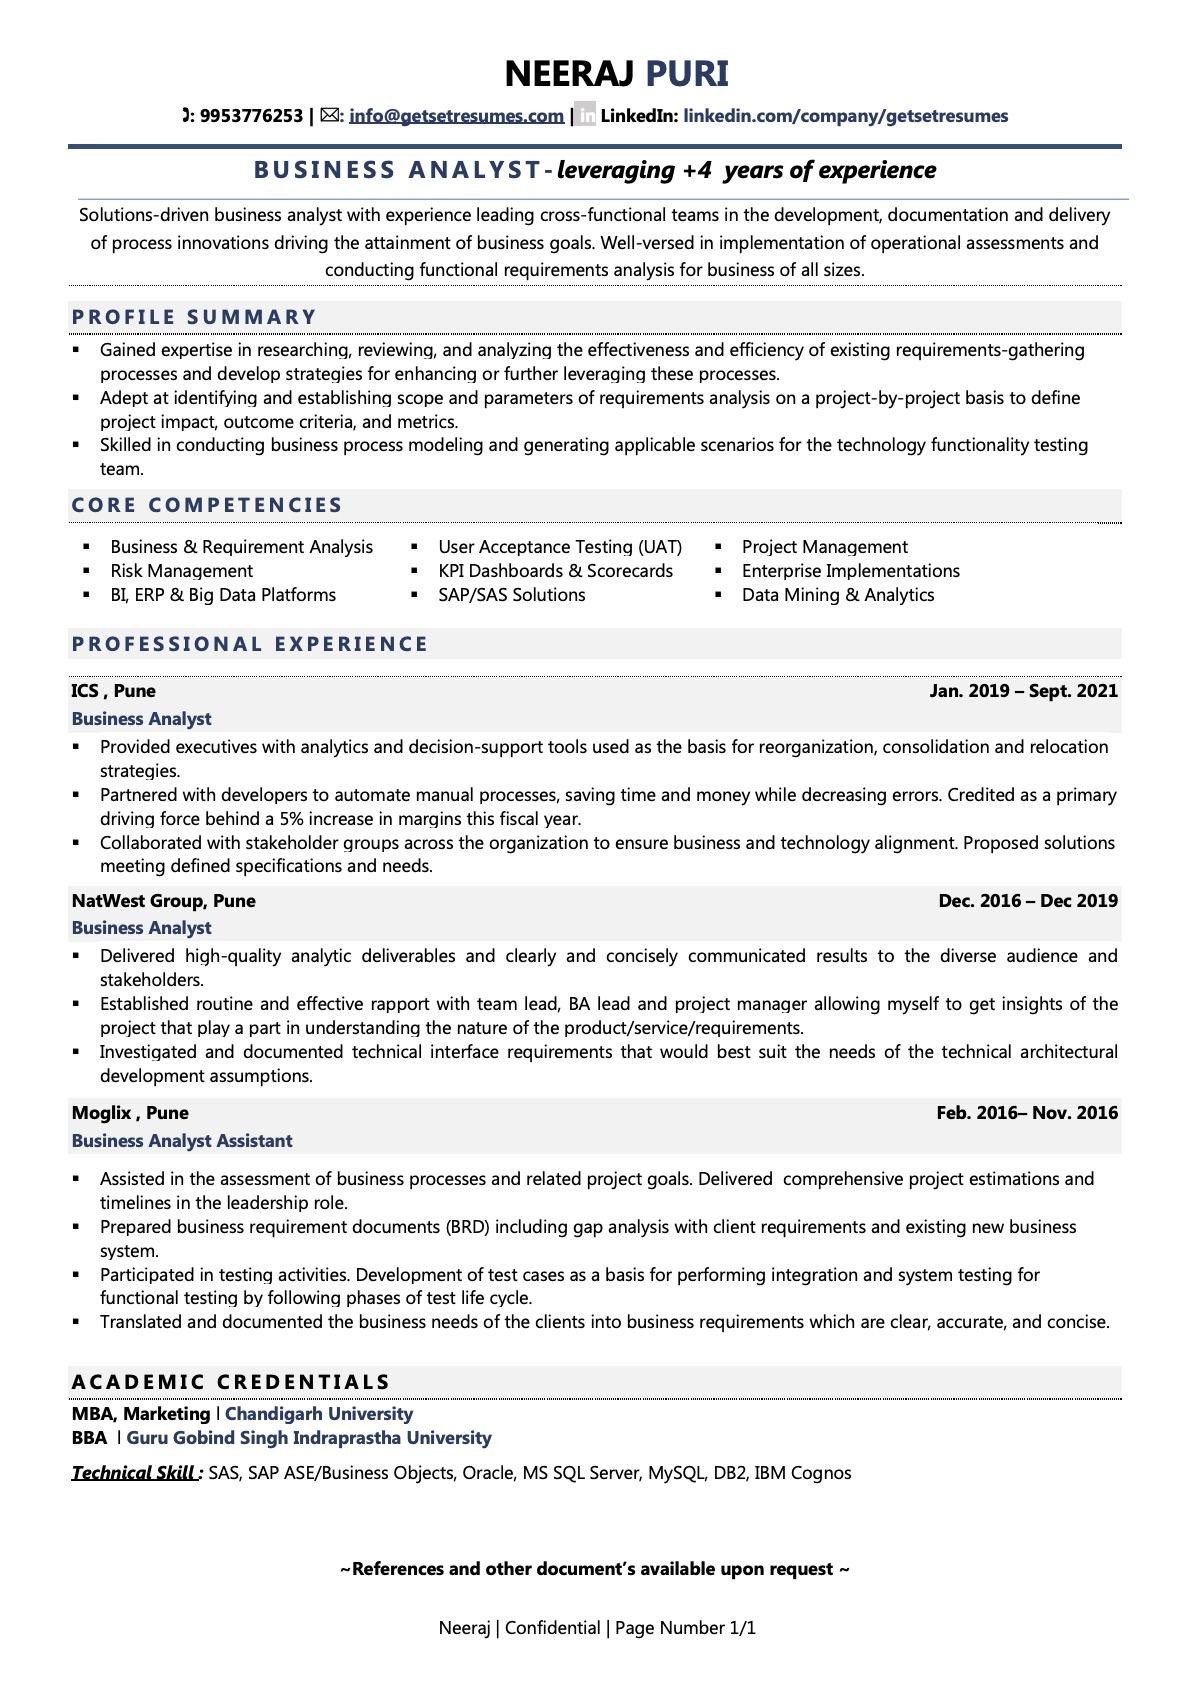 Functional Resume Sample for Business Analyst Business Analyst Resume Examples & Template (with Job Winning Tips)